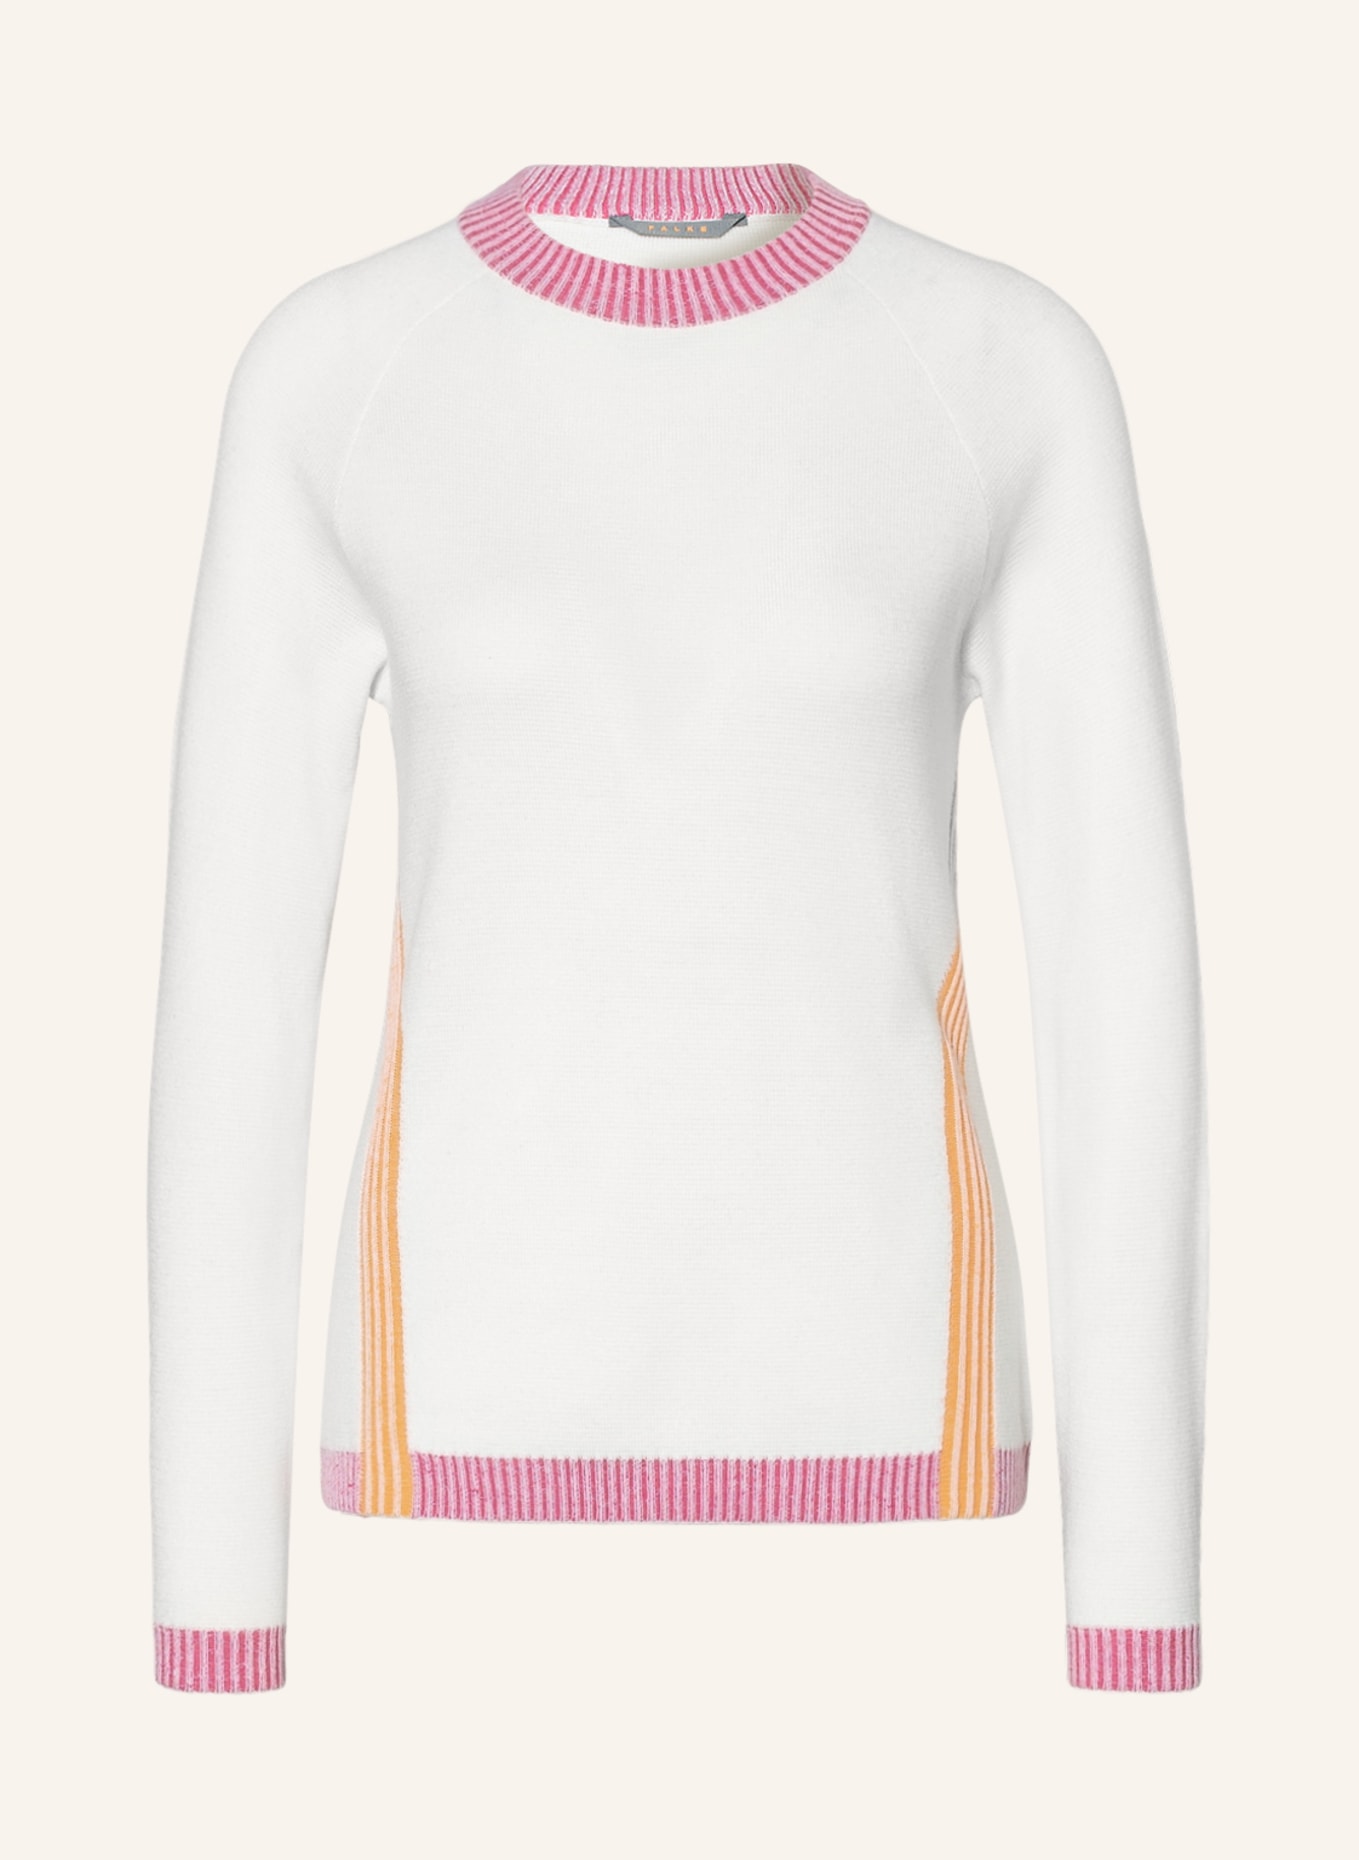 Deter Gelukkig is dat afgunst FALKE Sweater SKIING in white/ pink/ orange | Breuninger